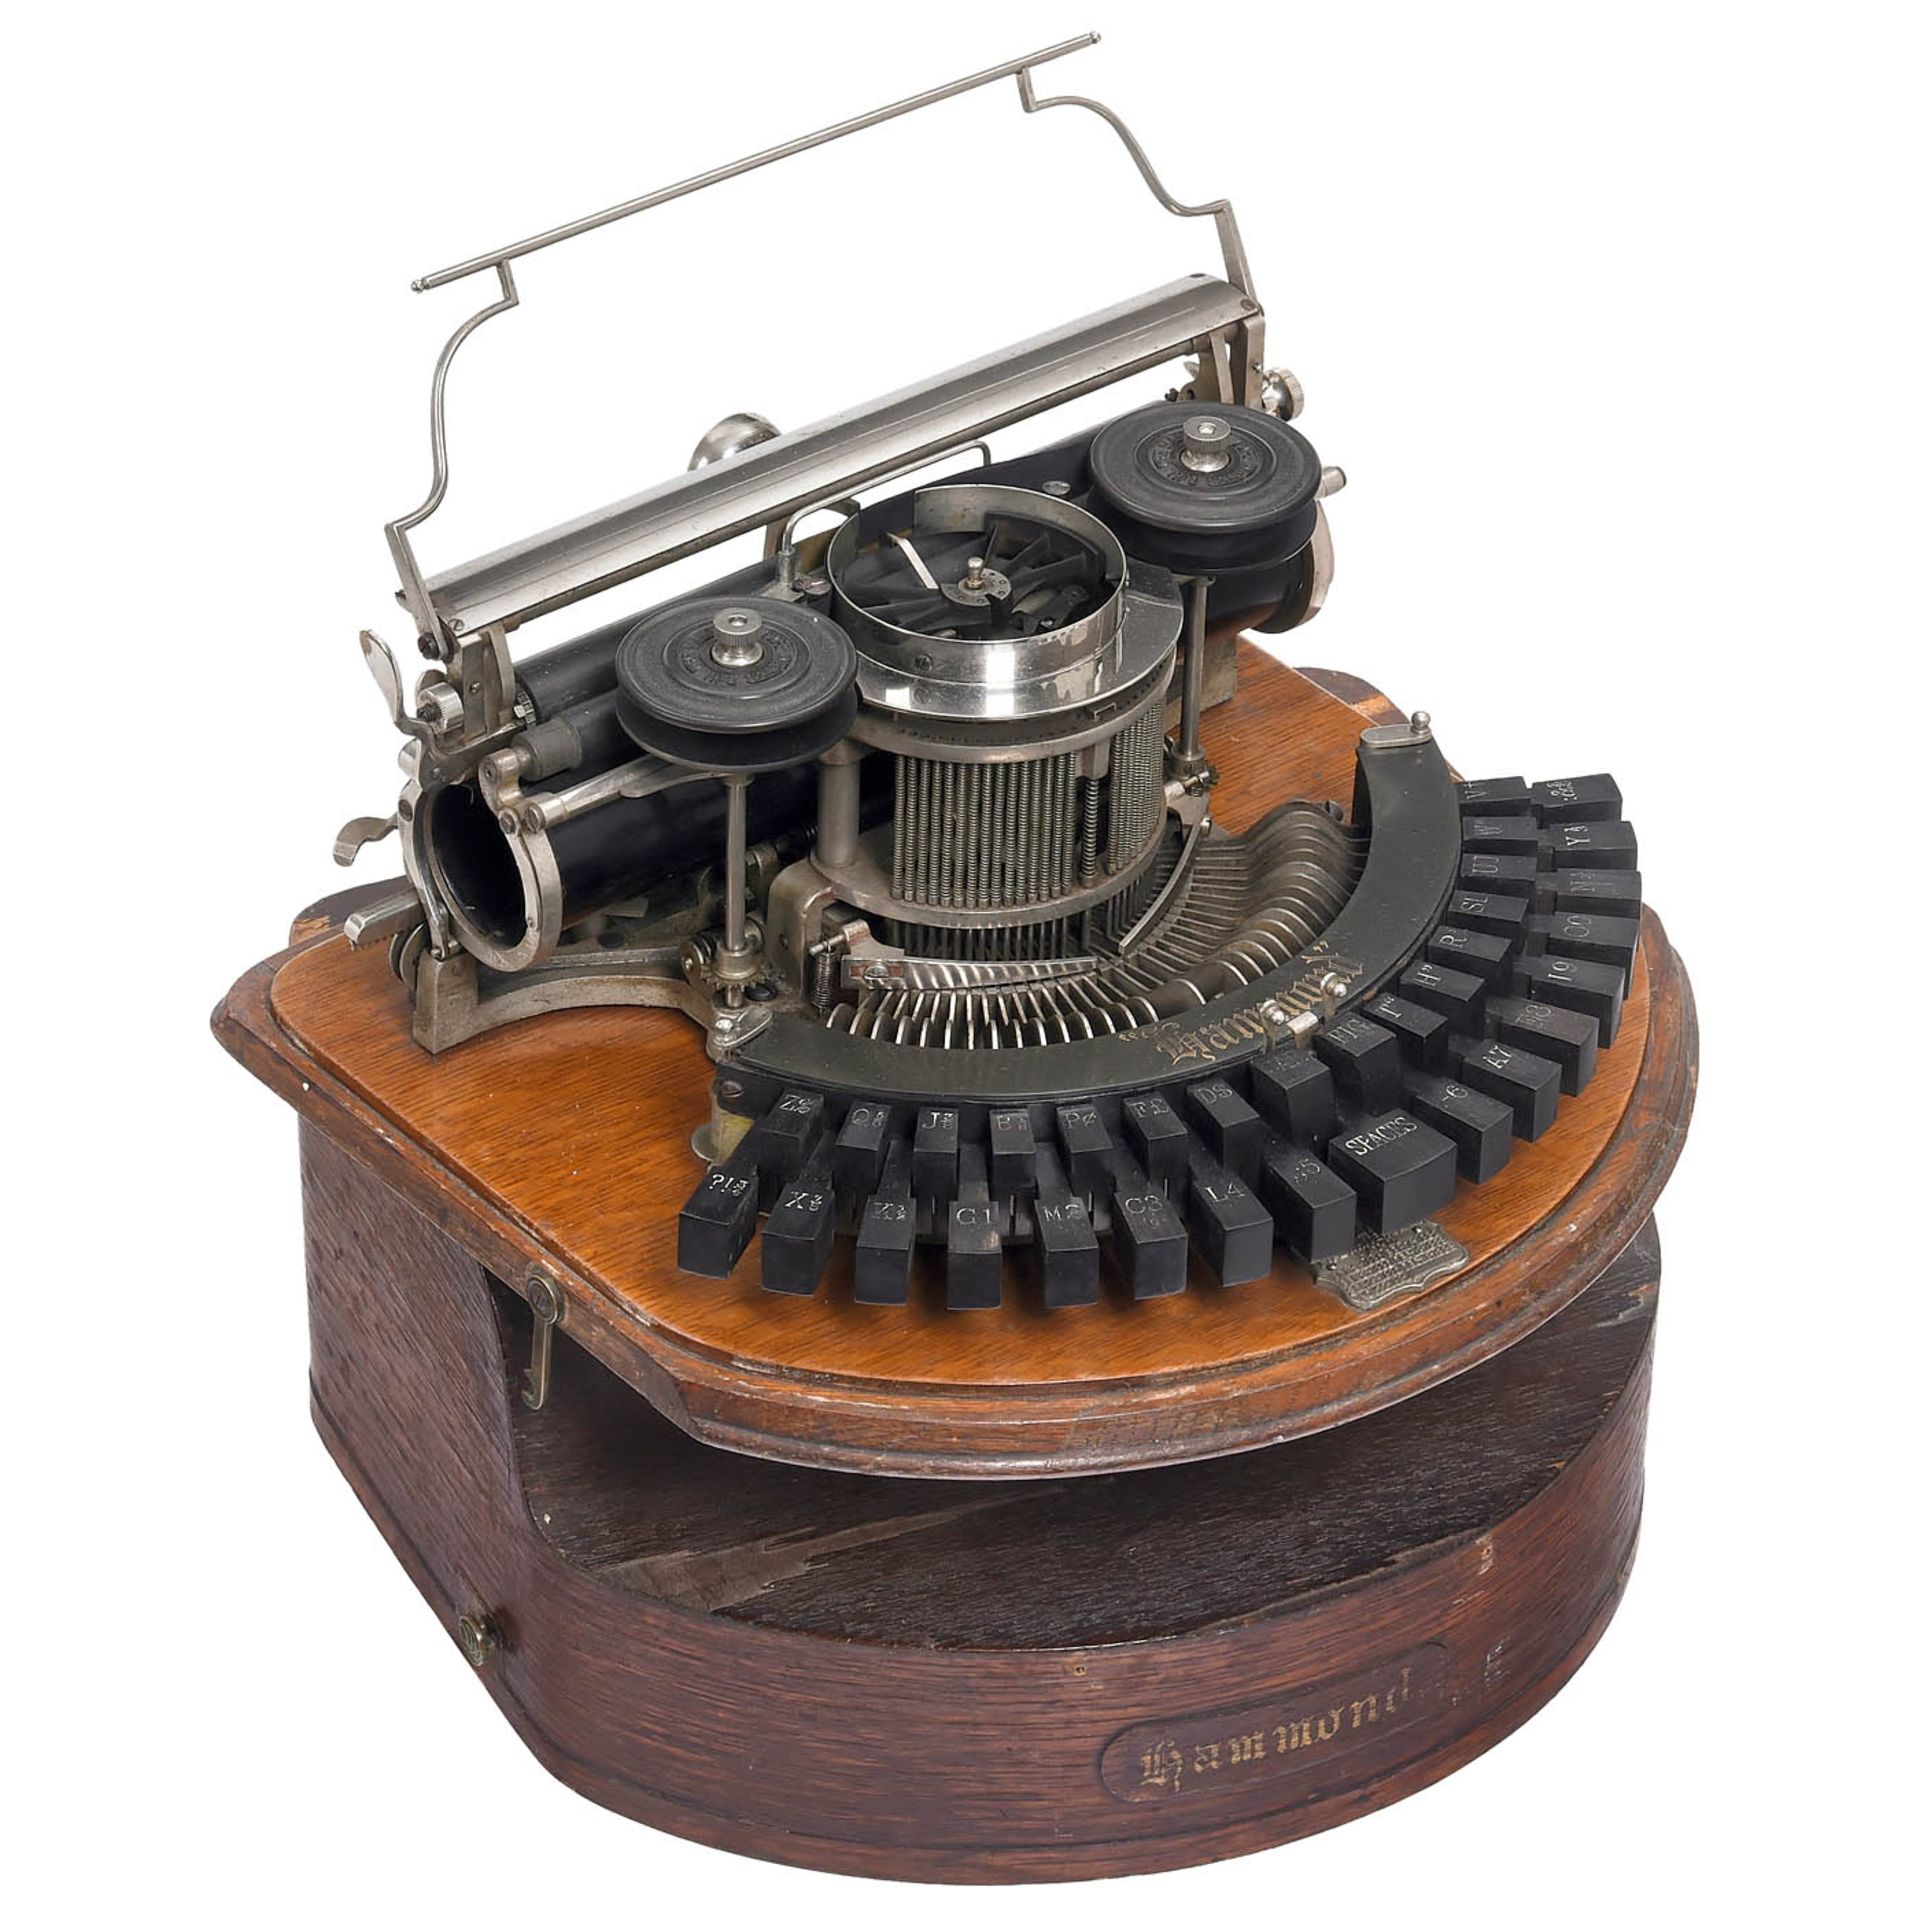 Hammond No. 1B Ideal and "Hammond No. 12 Universal" Typewriters - Image 2 of 3